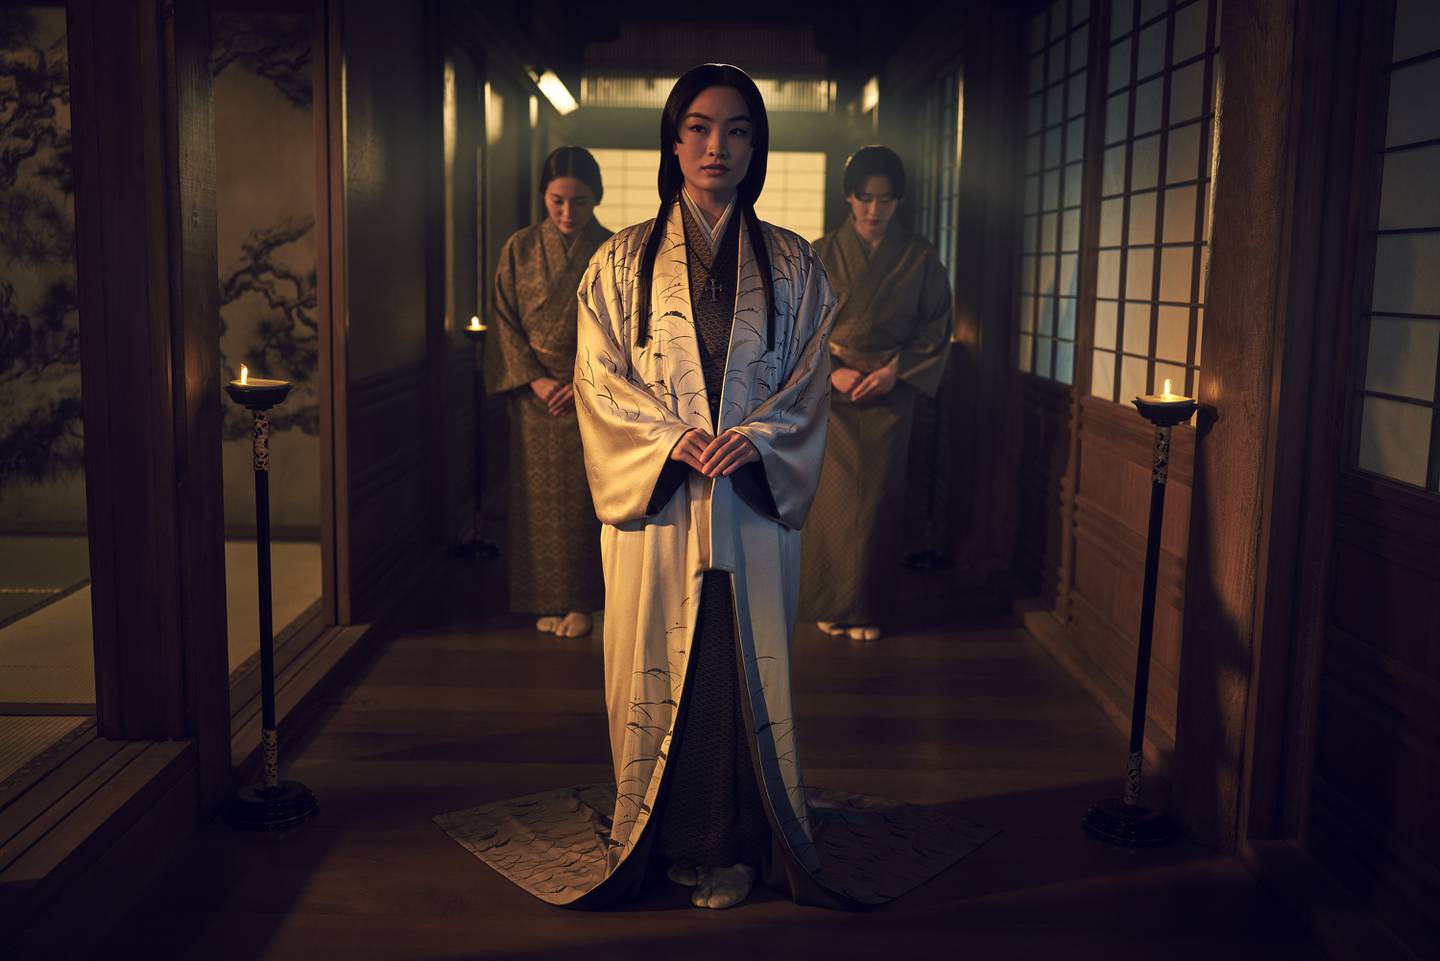 Anna Sawai spiller den engelsktalende og adelige Toda Mariko i serien om engelskmannen som havner som skipbrudden i en fremmed japansk kultur på 1600-tallet.